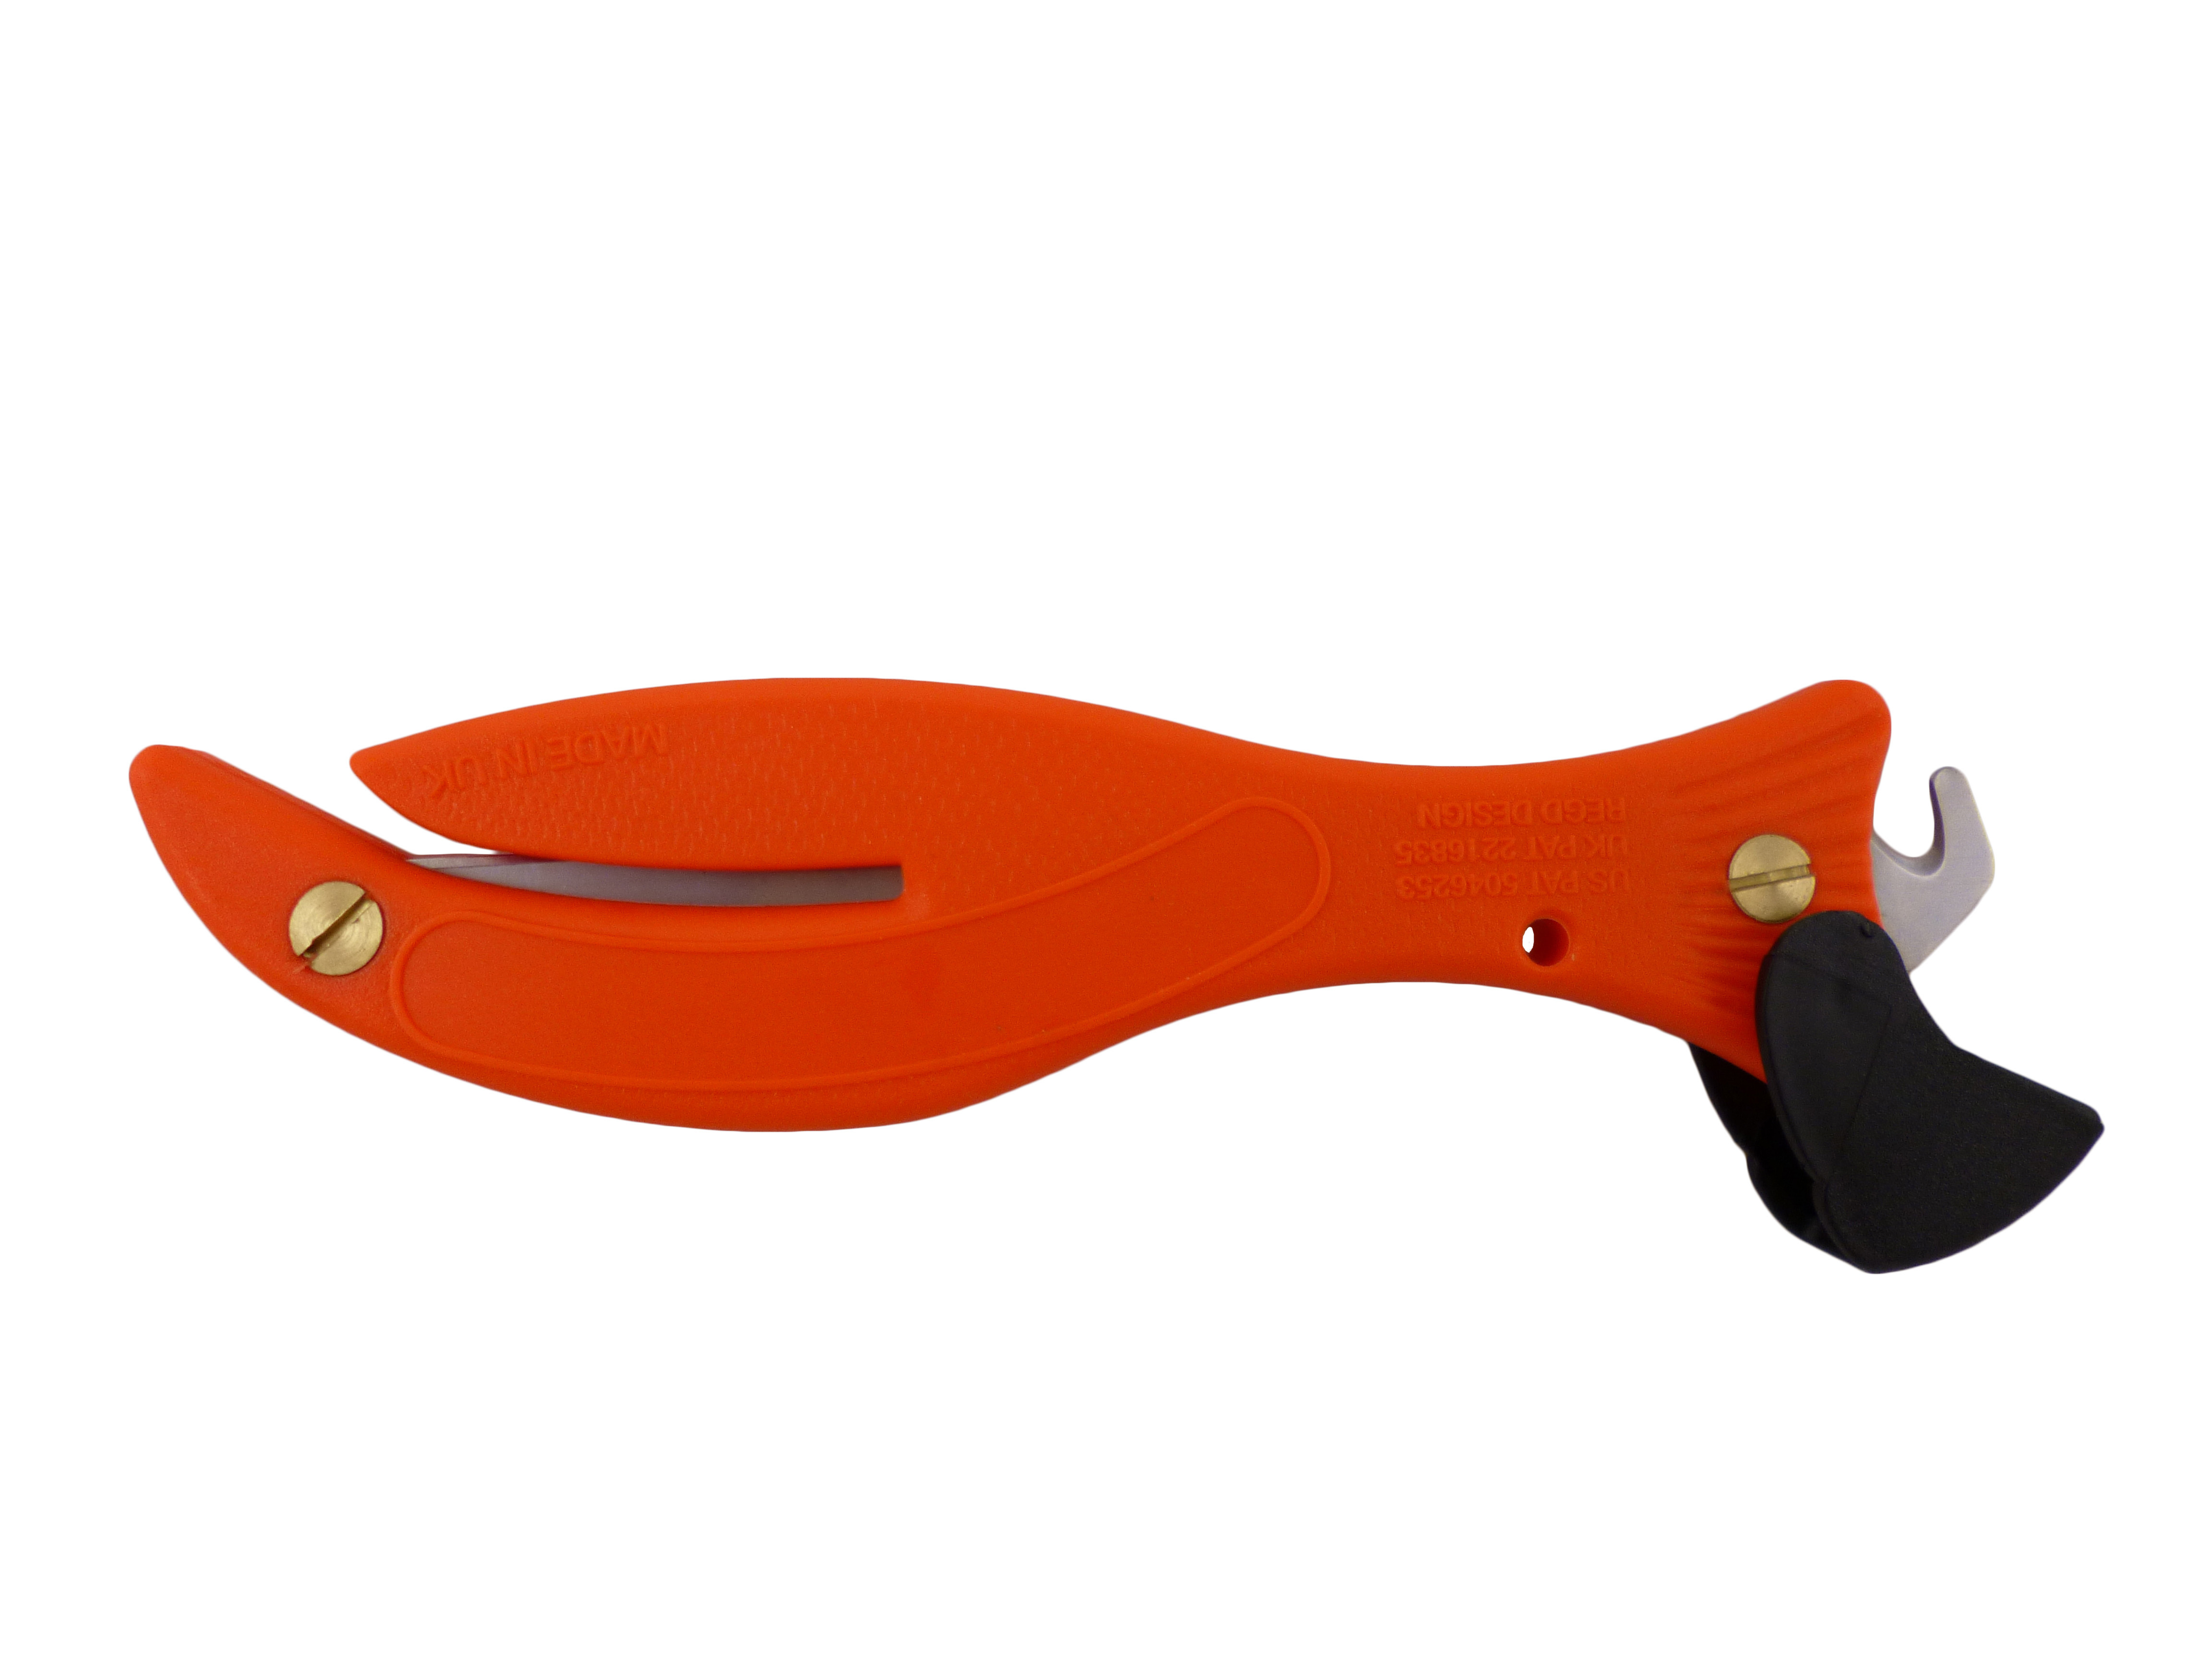 Fish 200 1x Orange Original Enclosed Blade Safety Box Tape Cutter Opener Tool 